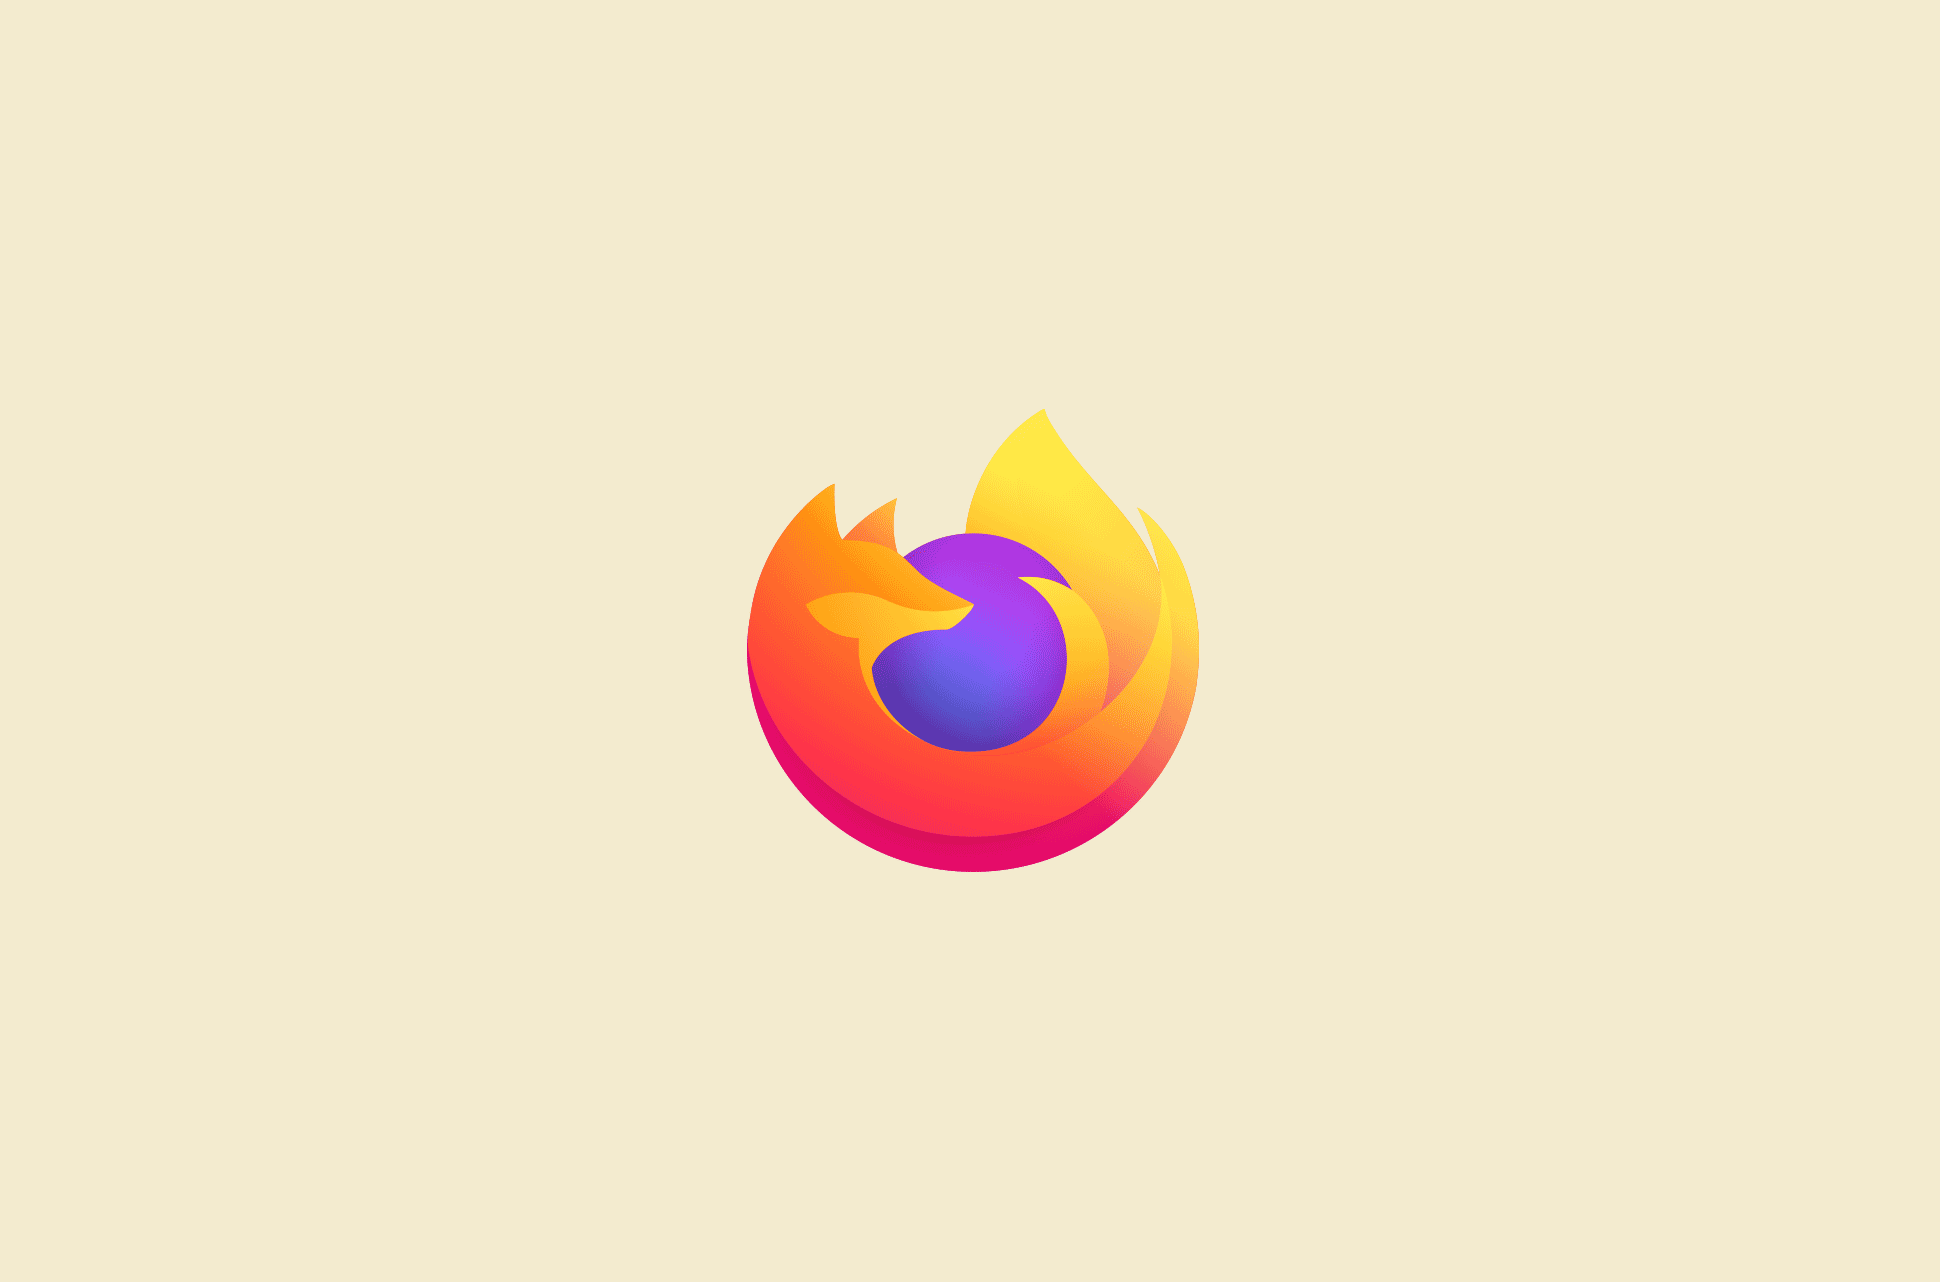 FireFox browser logo.